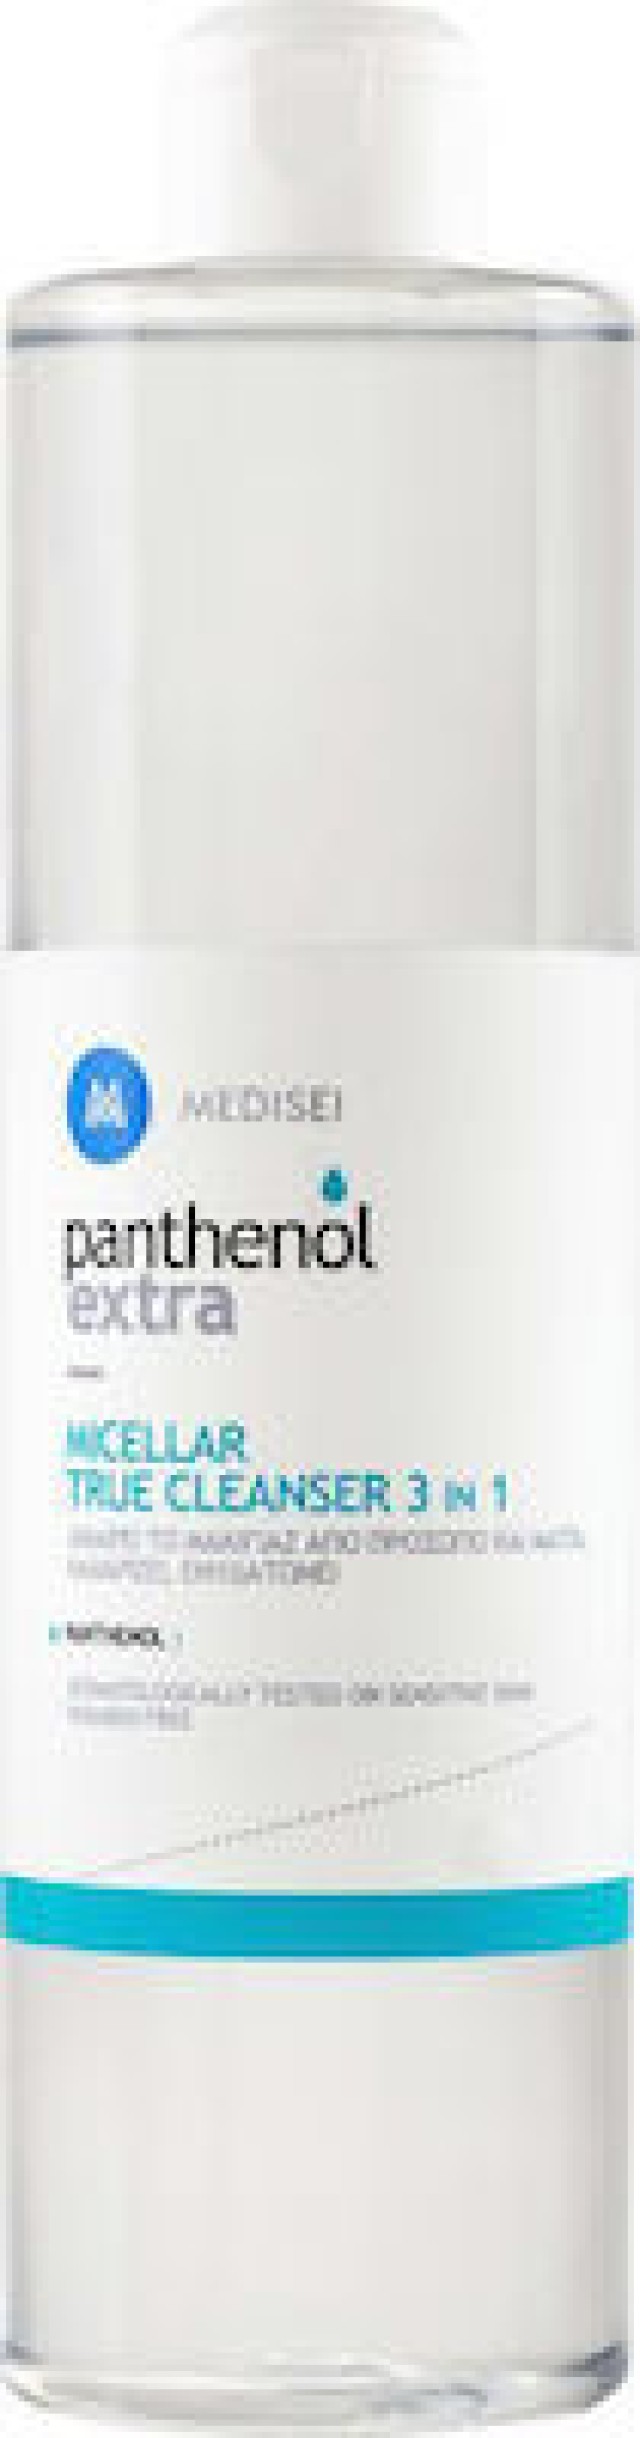 Panthenol Extra Micellar True Cleanser 3 in 1 100ml